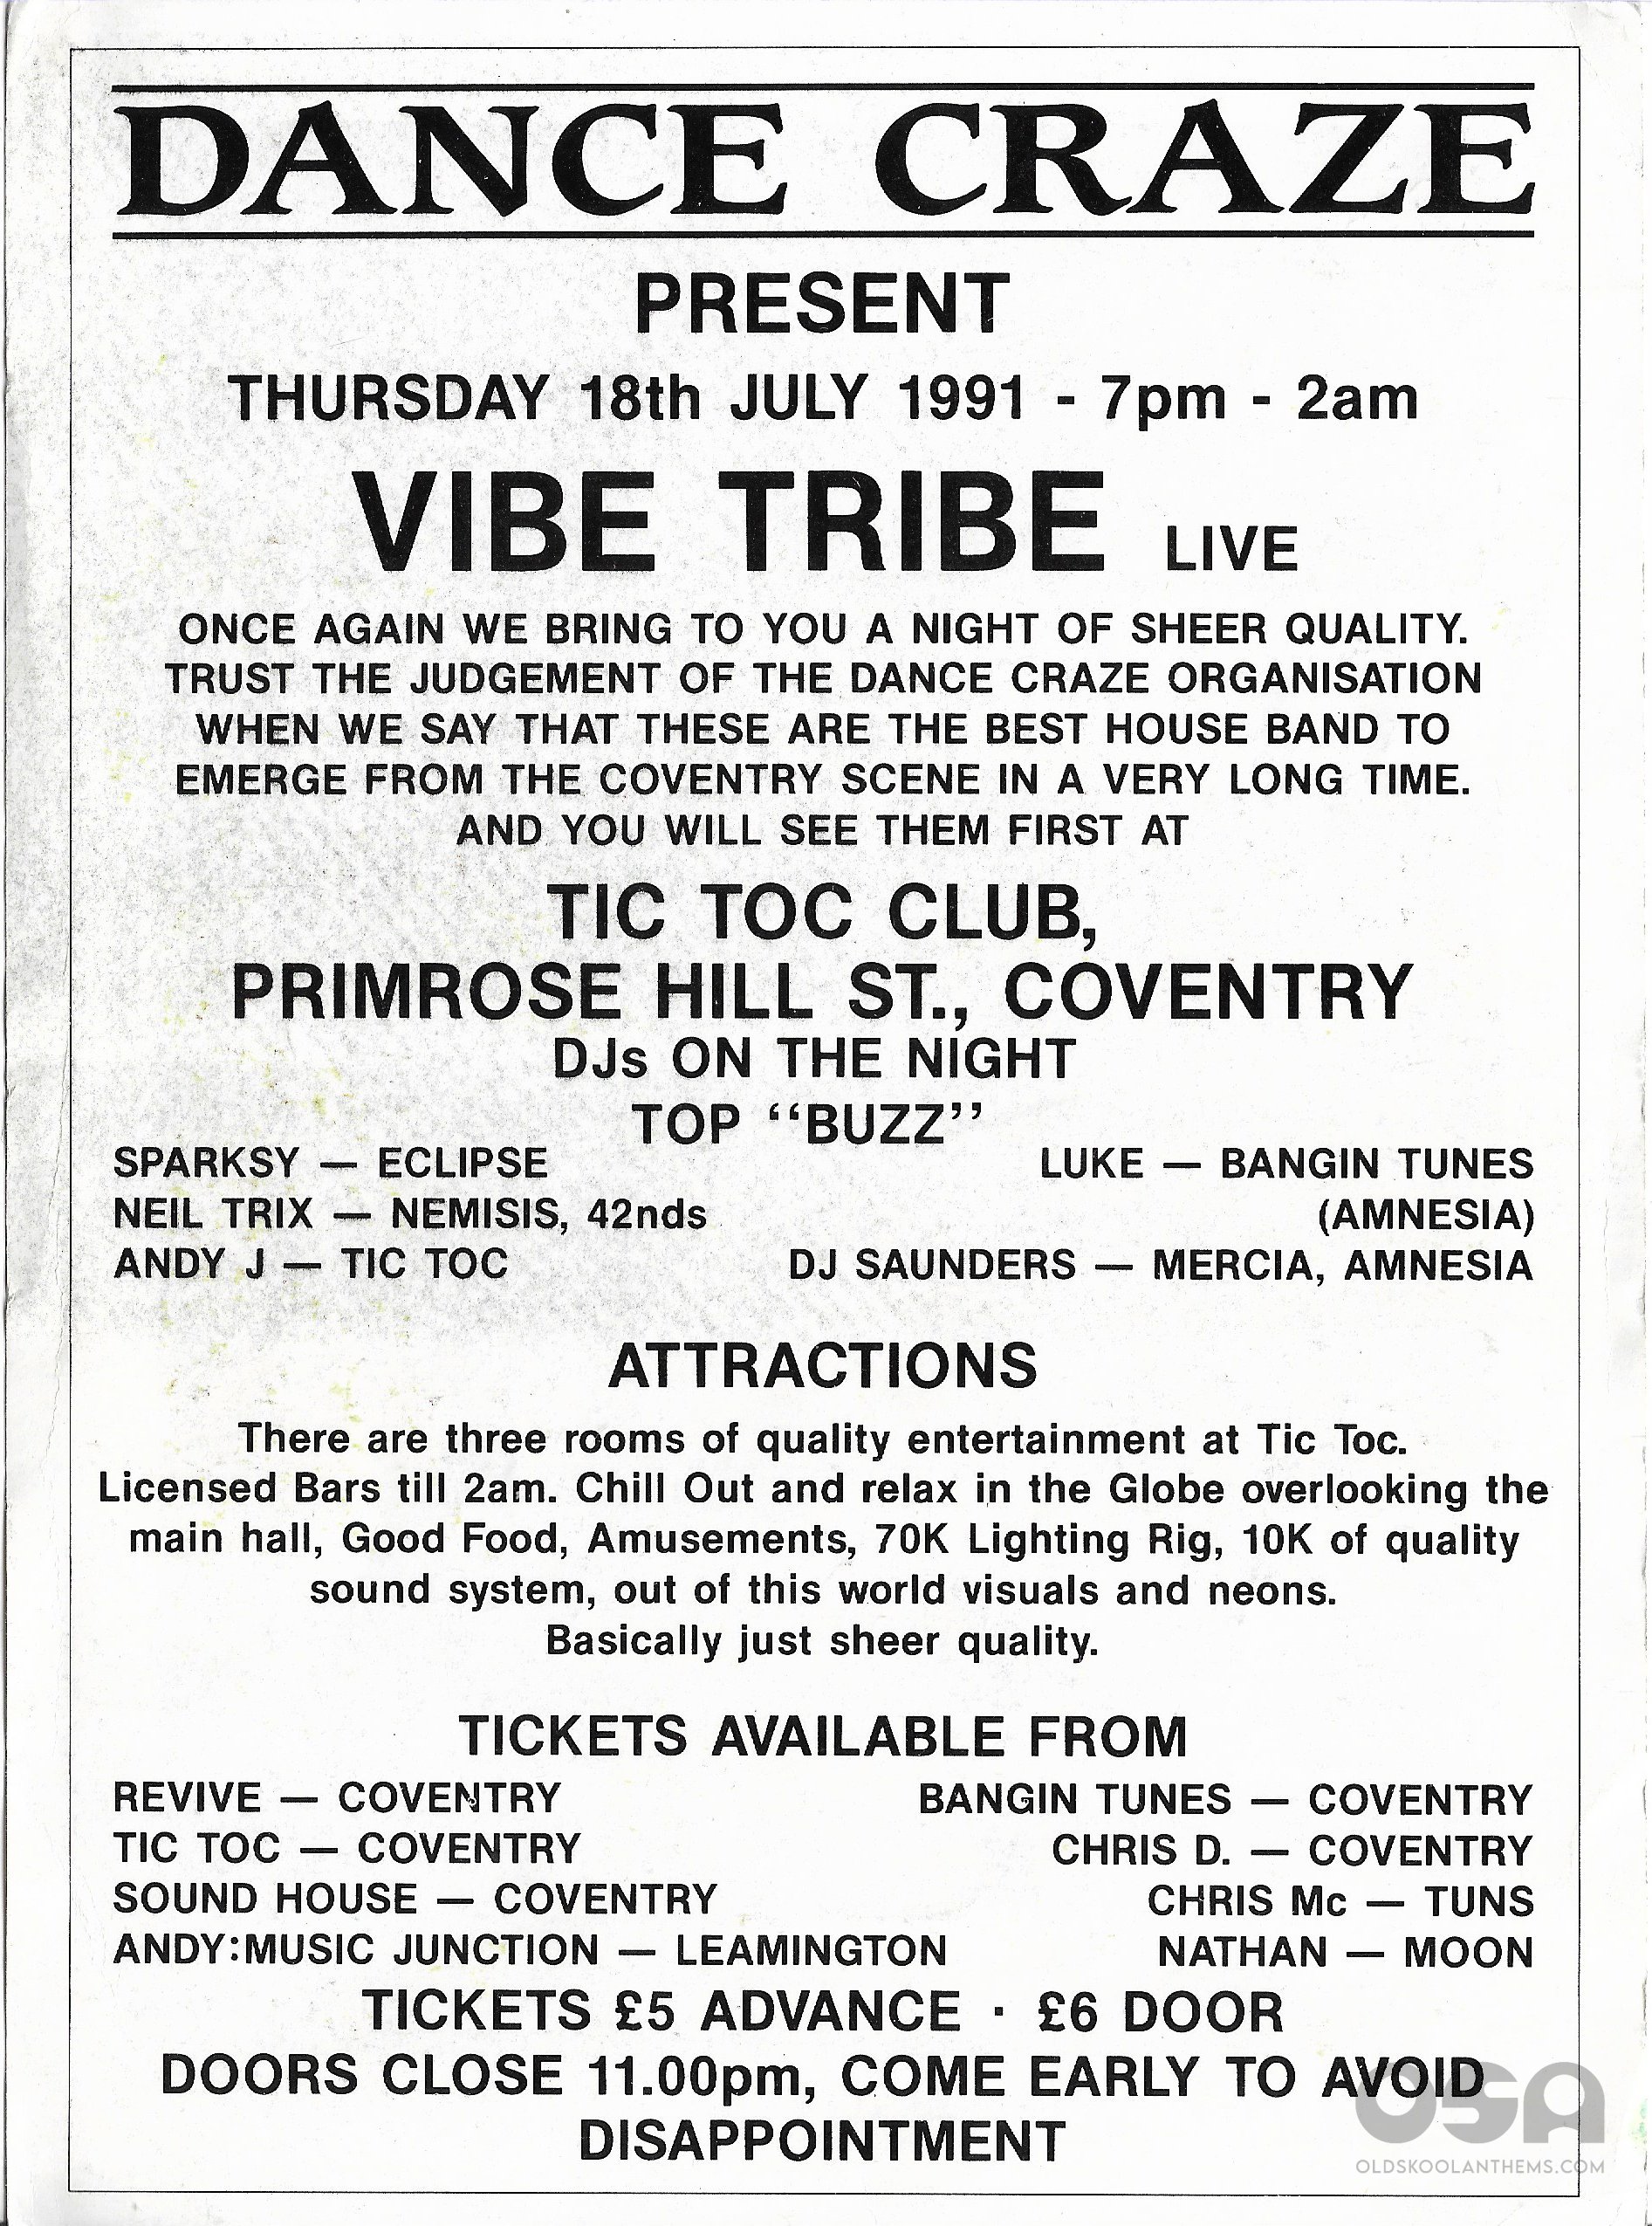 Dance Craze @ Tic Toc - Coventry - 18th July 1991 B .jpg